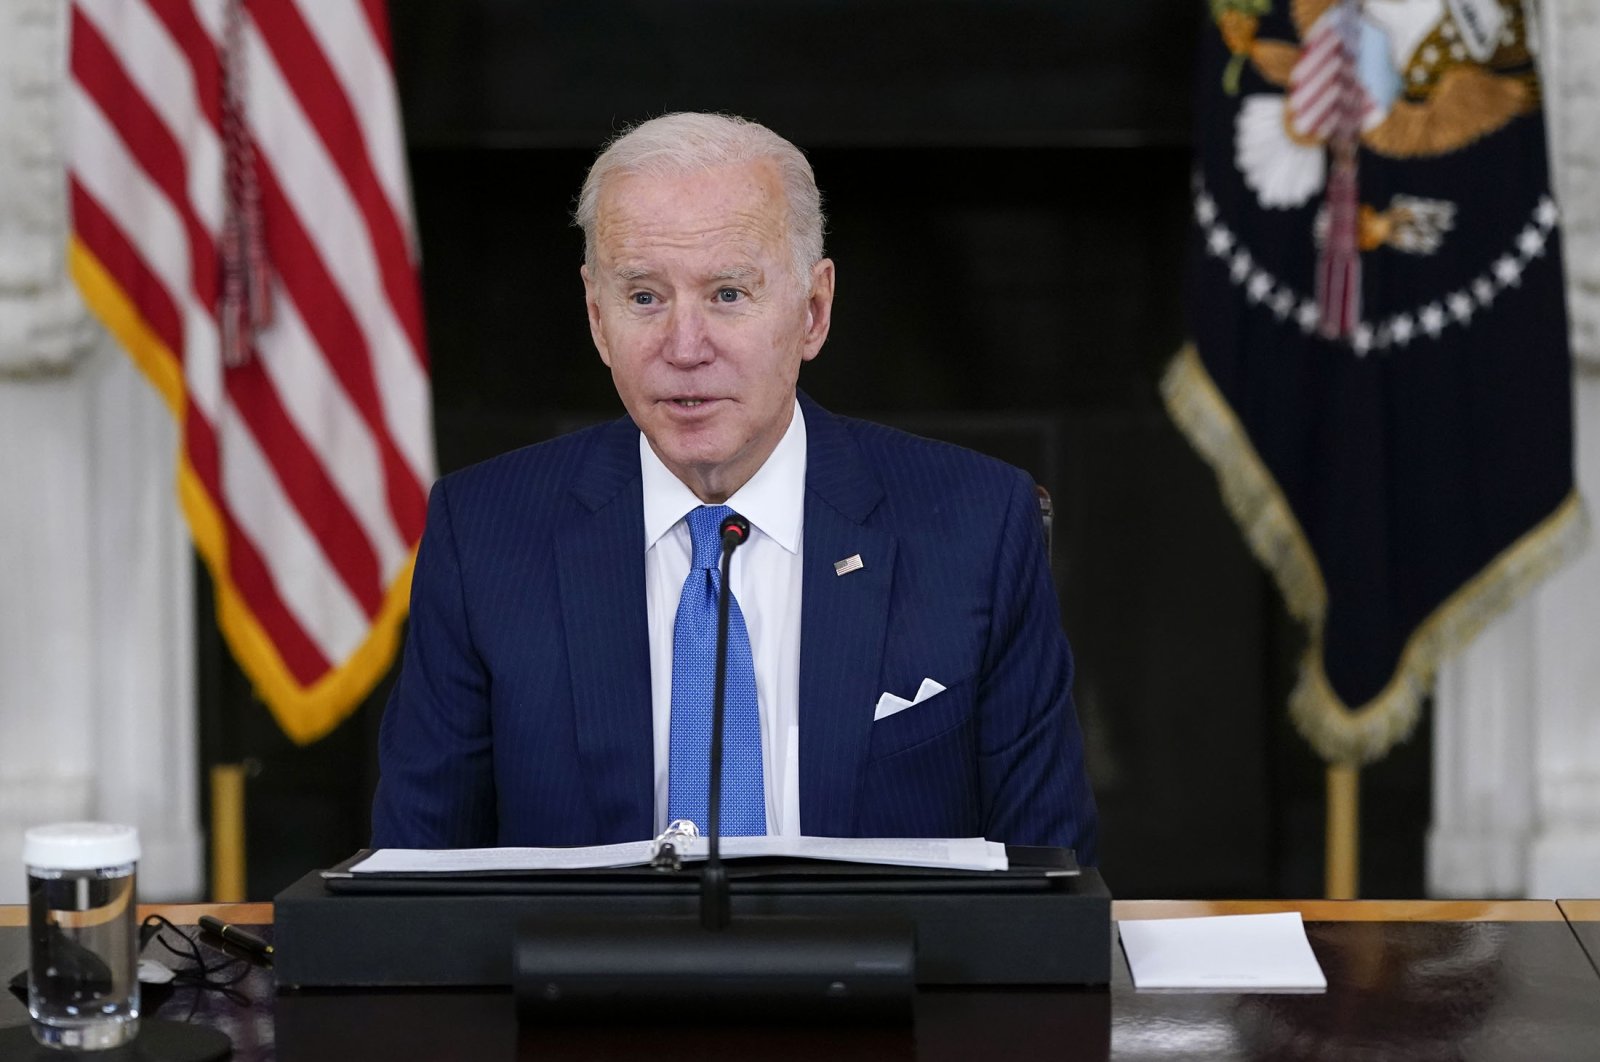 President Joe Biden speaks in the State Dining Room of the White House, Washington, U.S., Feb. 9, 2022. (AP Photo)